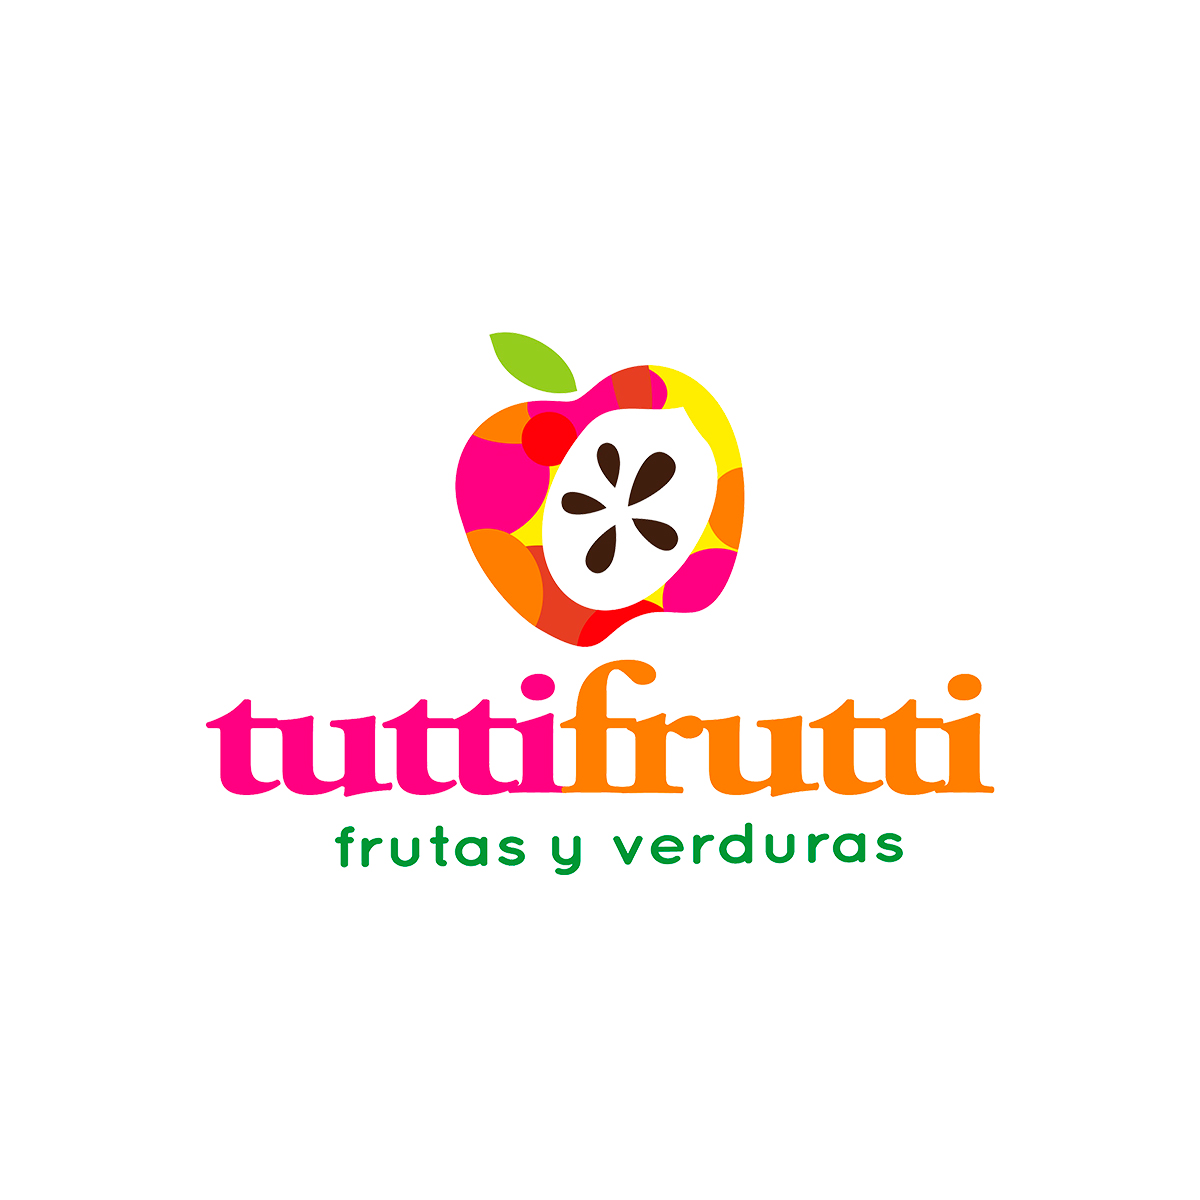 Logo empresa tuttifrutti